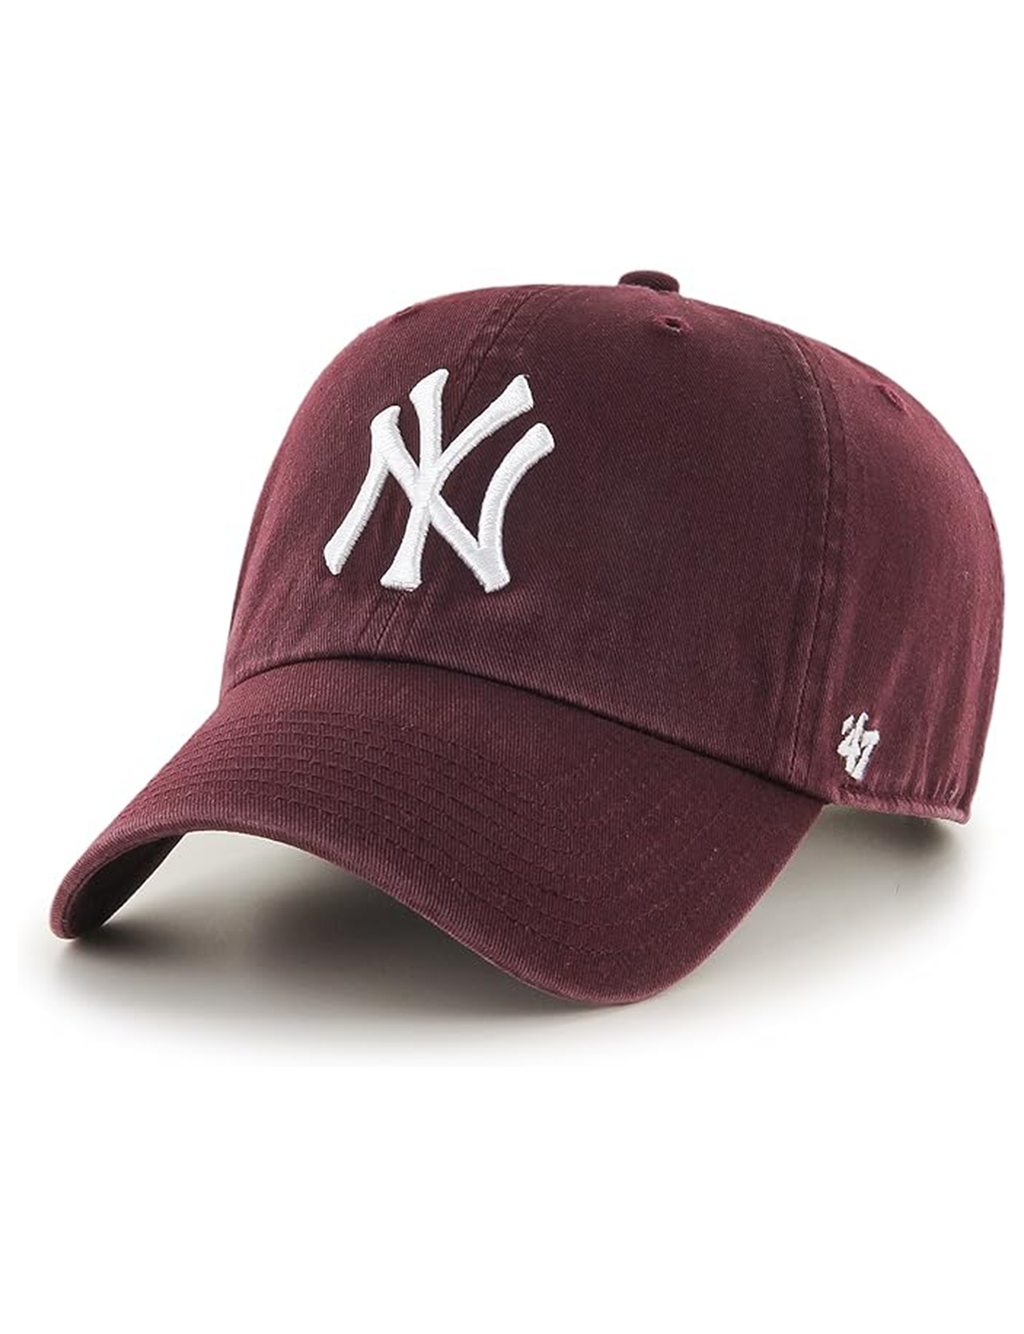 NY Yankees Basic Ball Cap, Dark Maroon/White